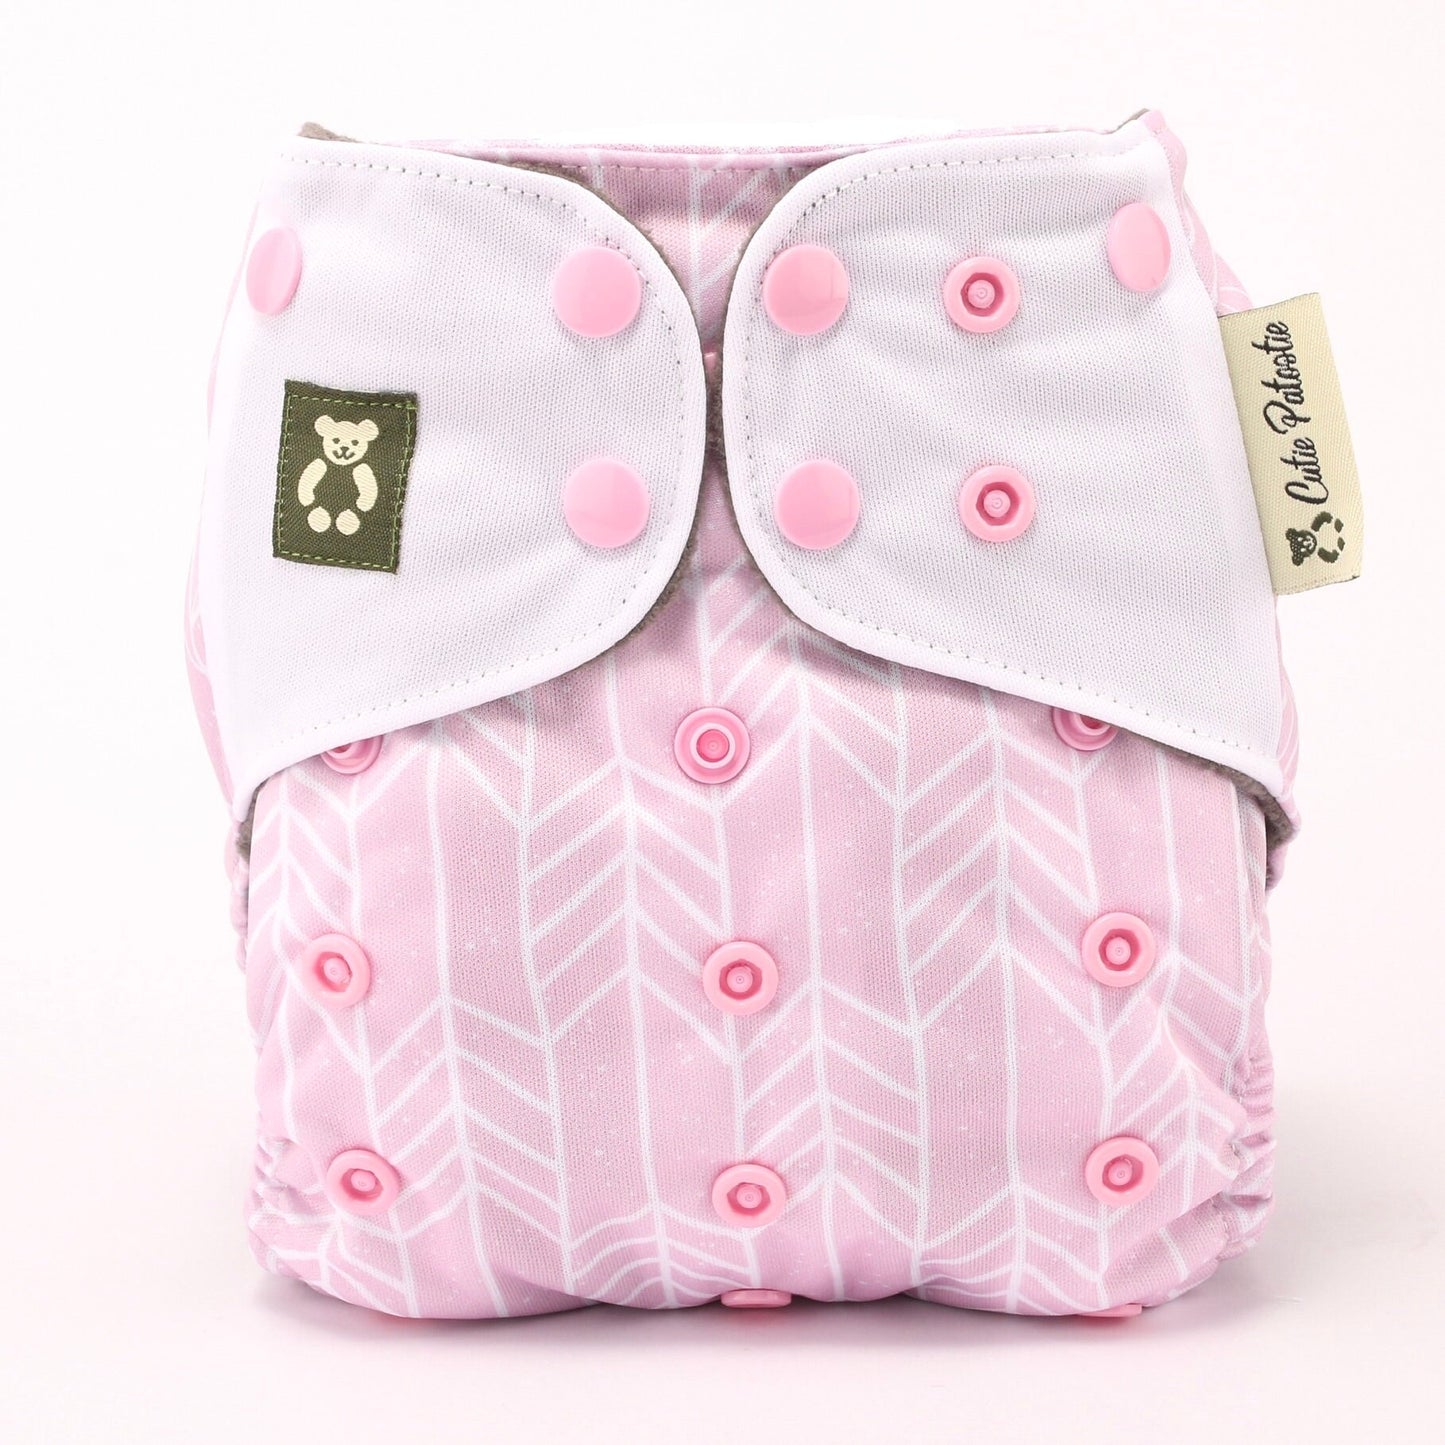 Vectors And Matrix - Cutie Patootie FlexiNappy Premium Best Cloth Diapers